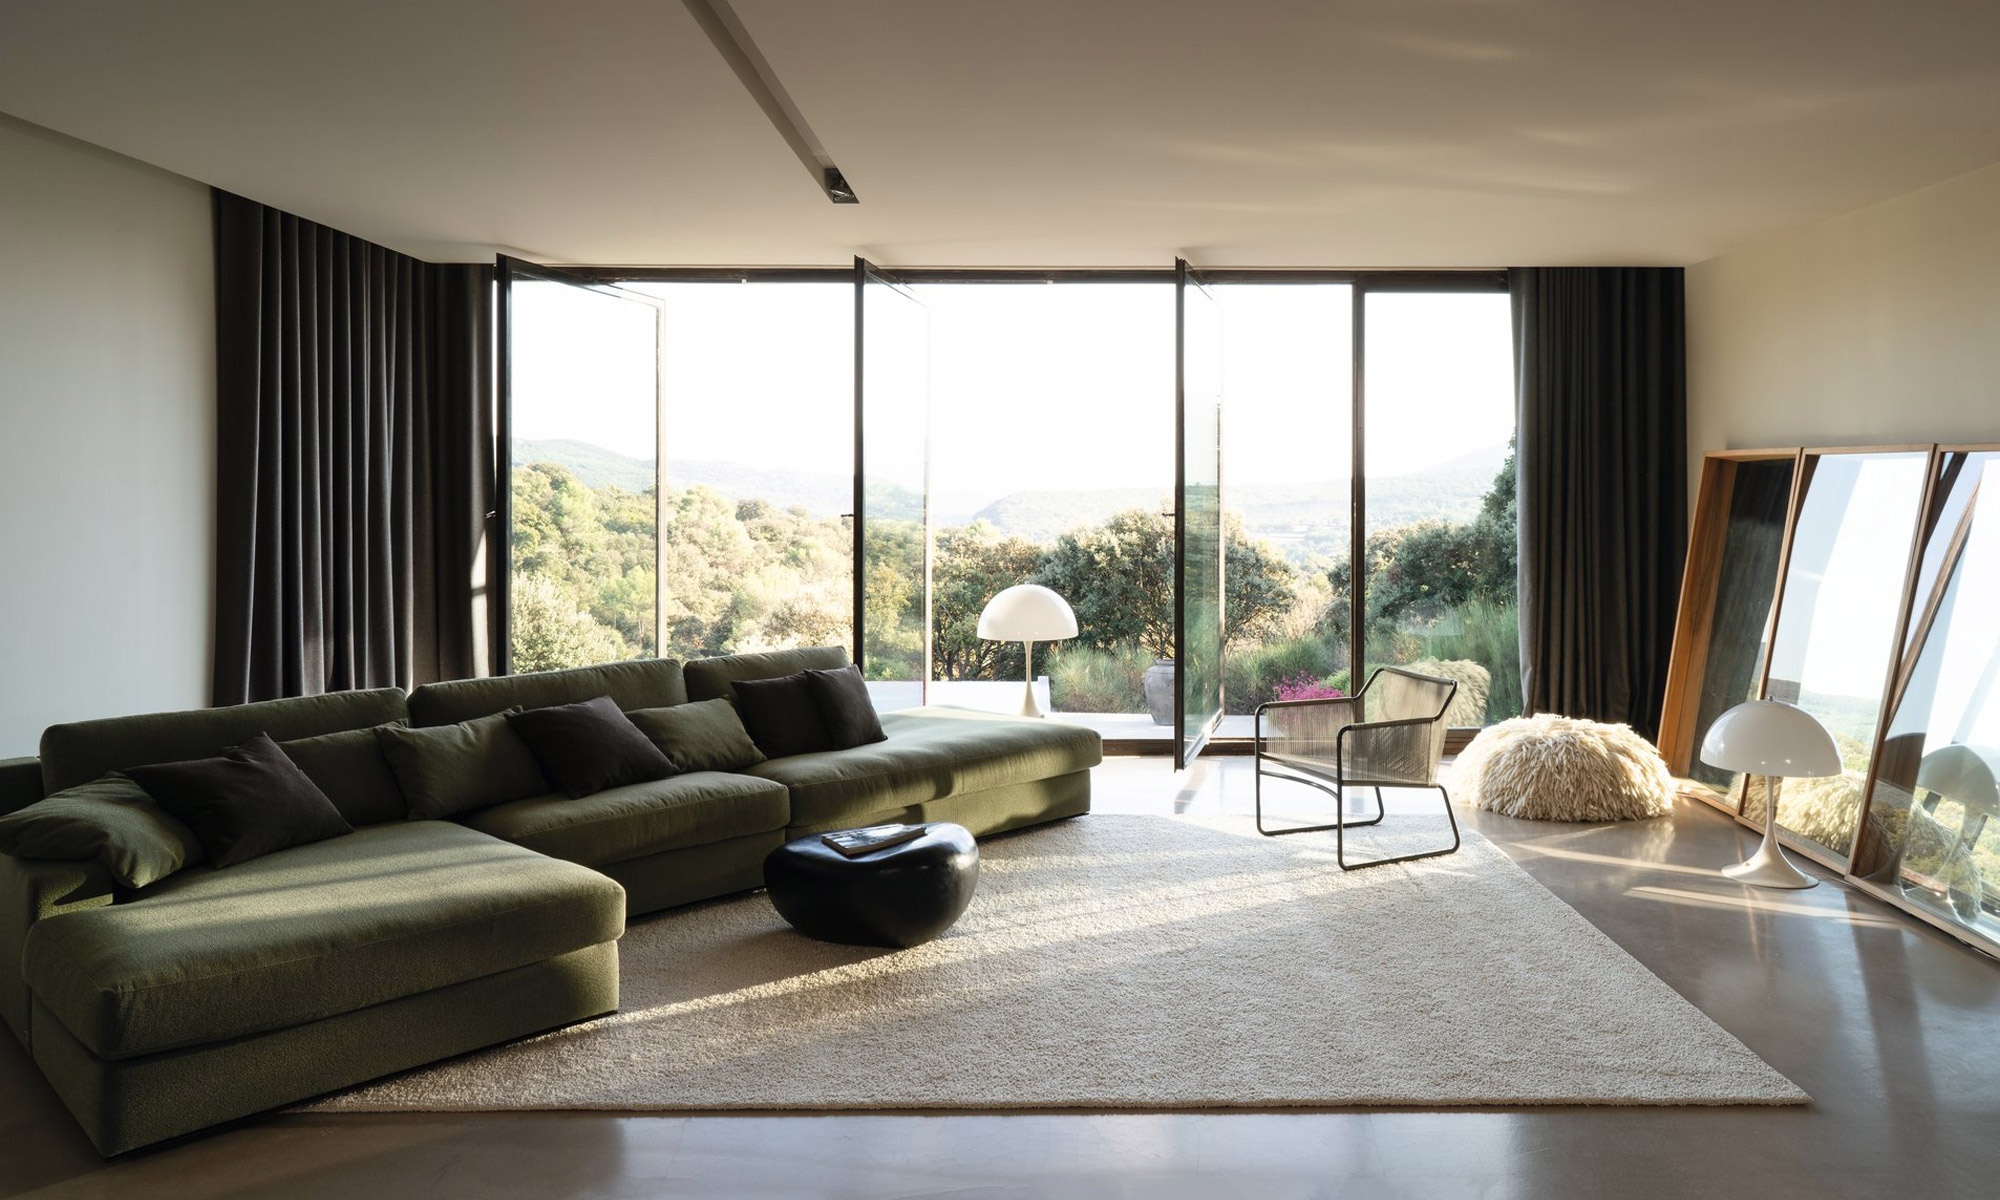 kullack-neu-wulmstorf-couch-sofa-wohnzimmer-modern-edel-hochwertige-moebel